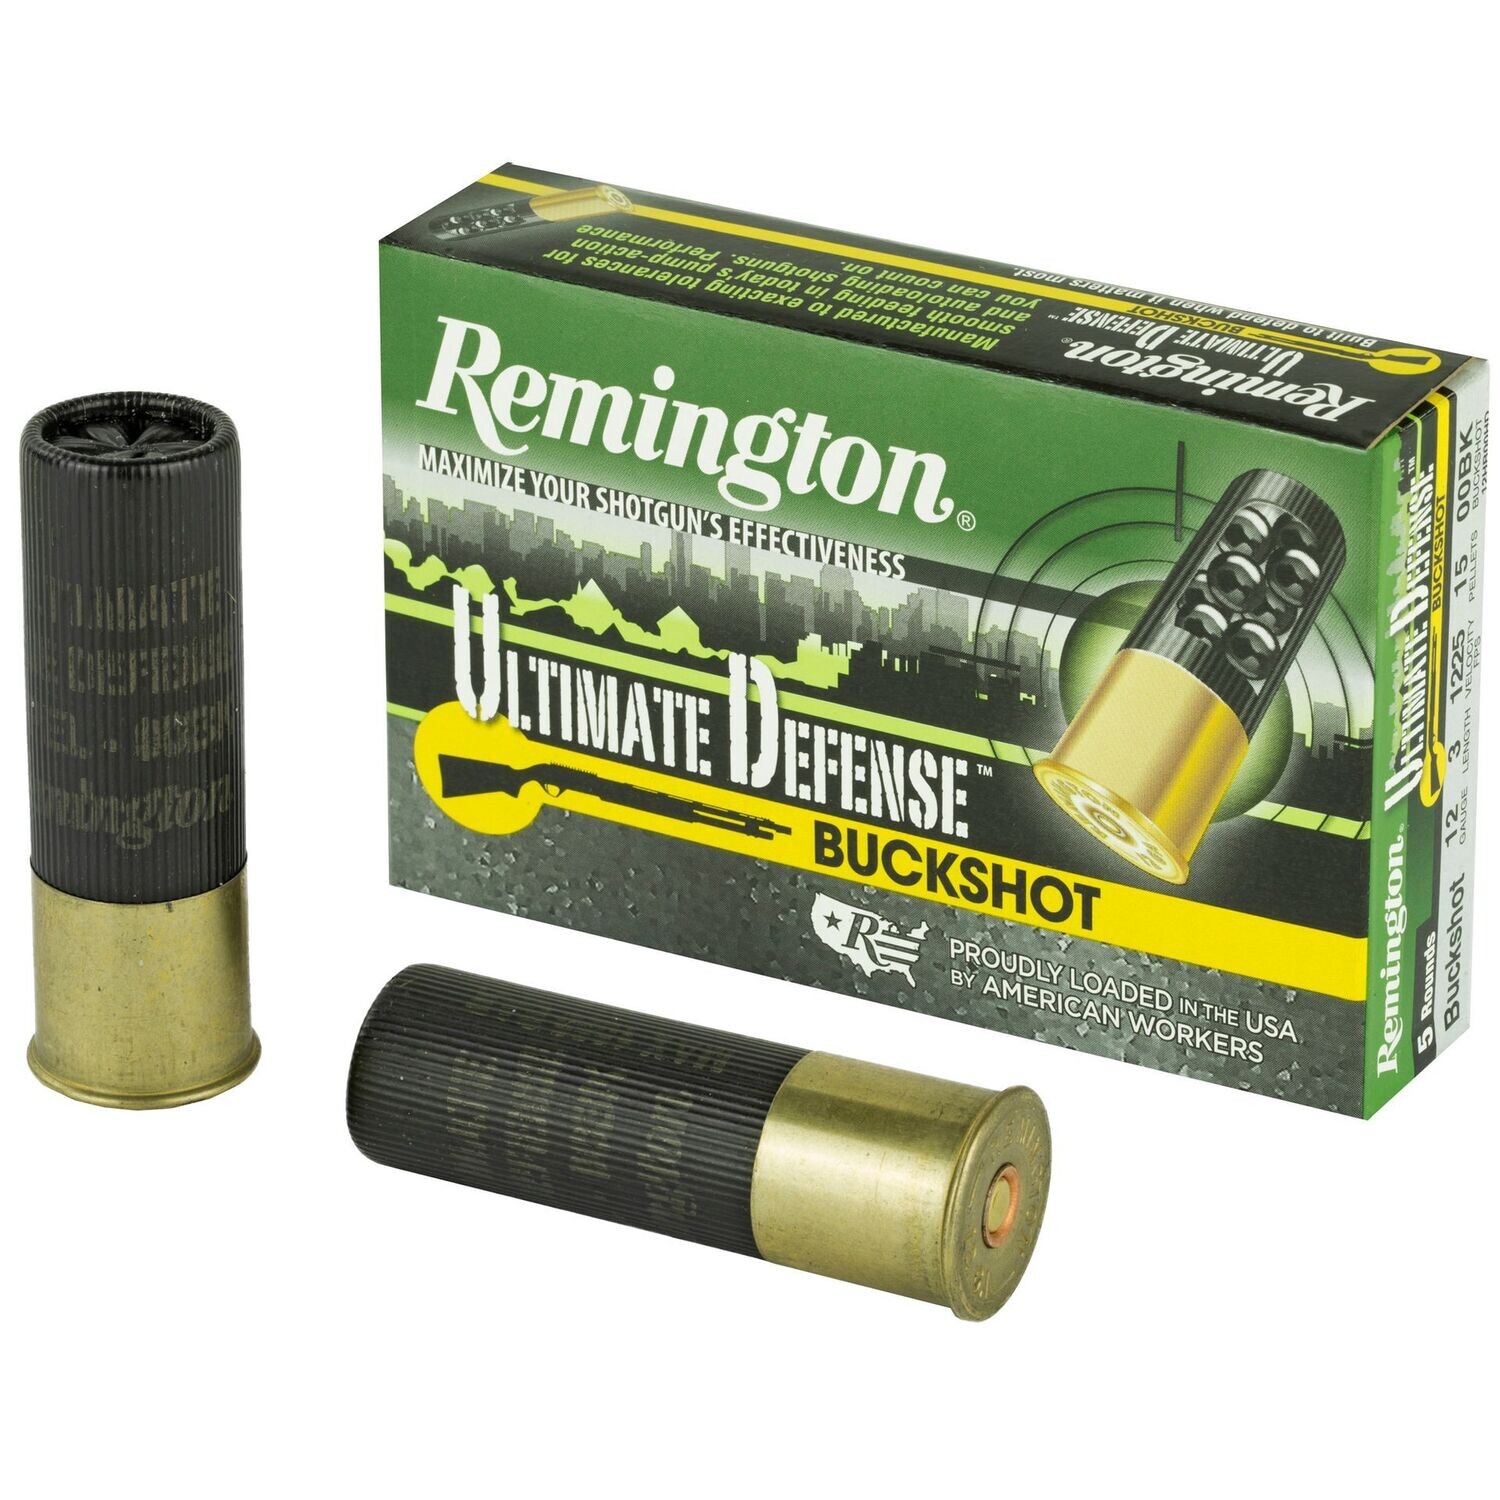 Remington, Ultimate Defense Buckshot, 12 Gauge 3